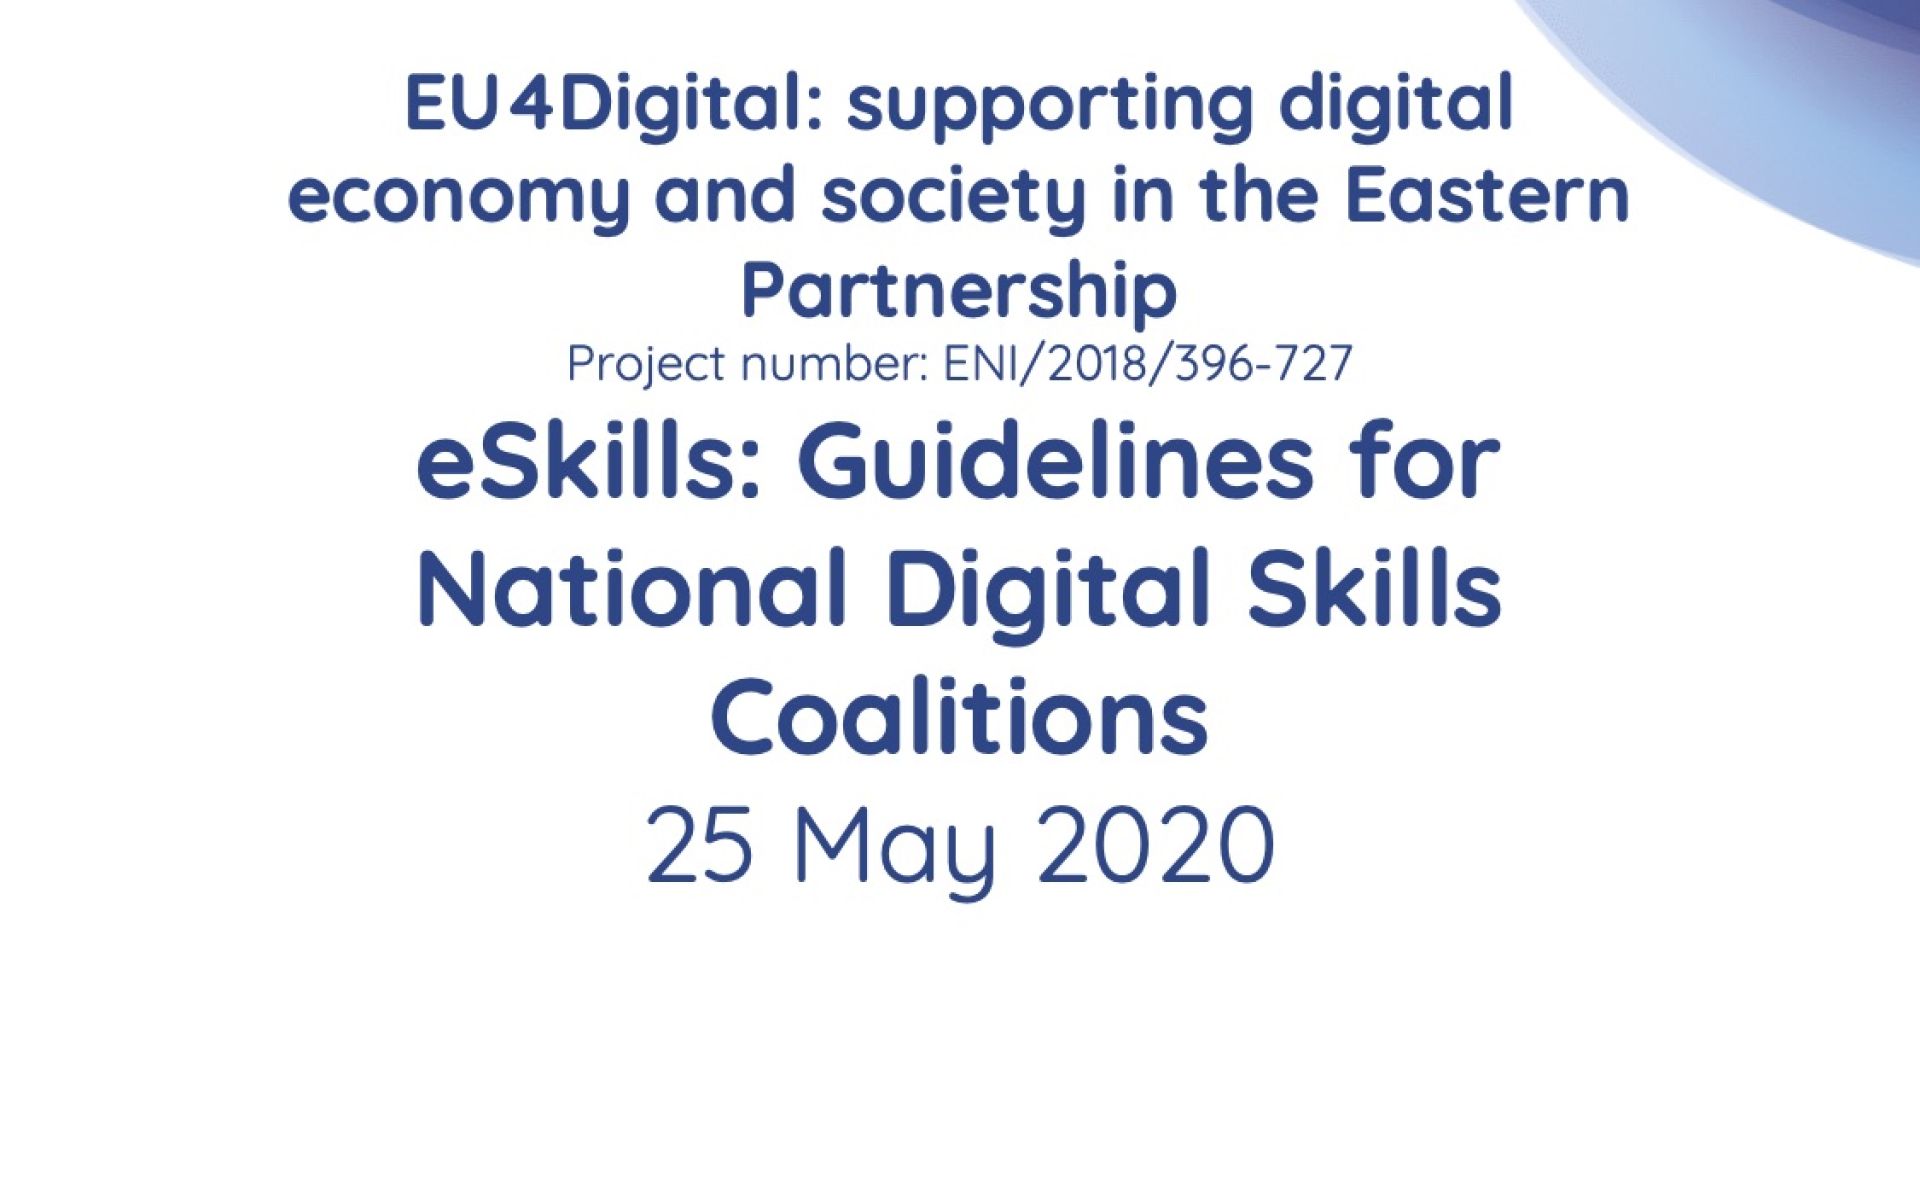 eSkills: Guidelines for National Digital Skills Coalitions